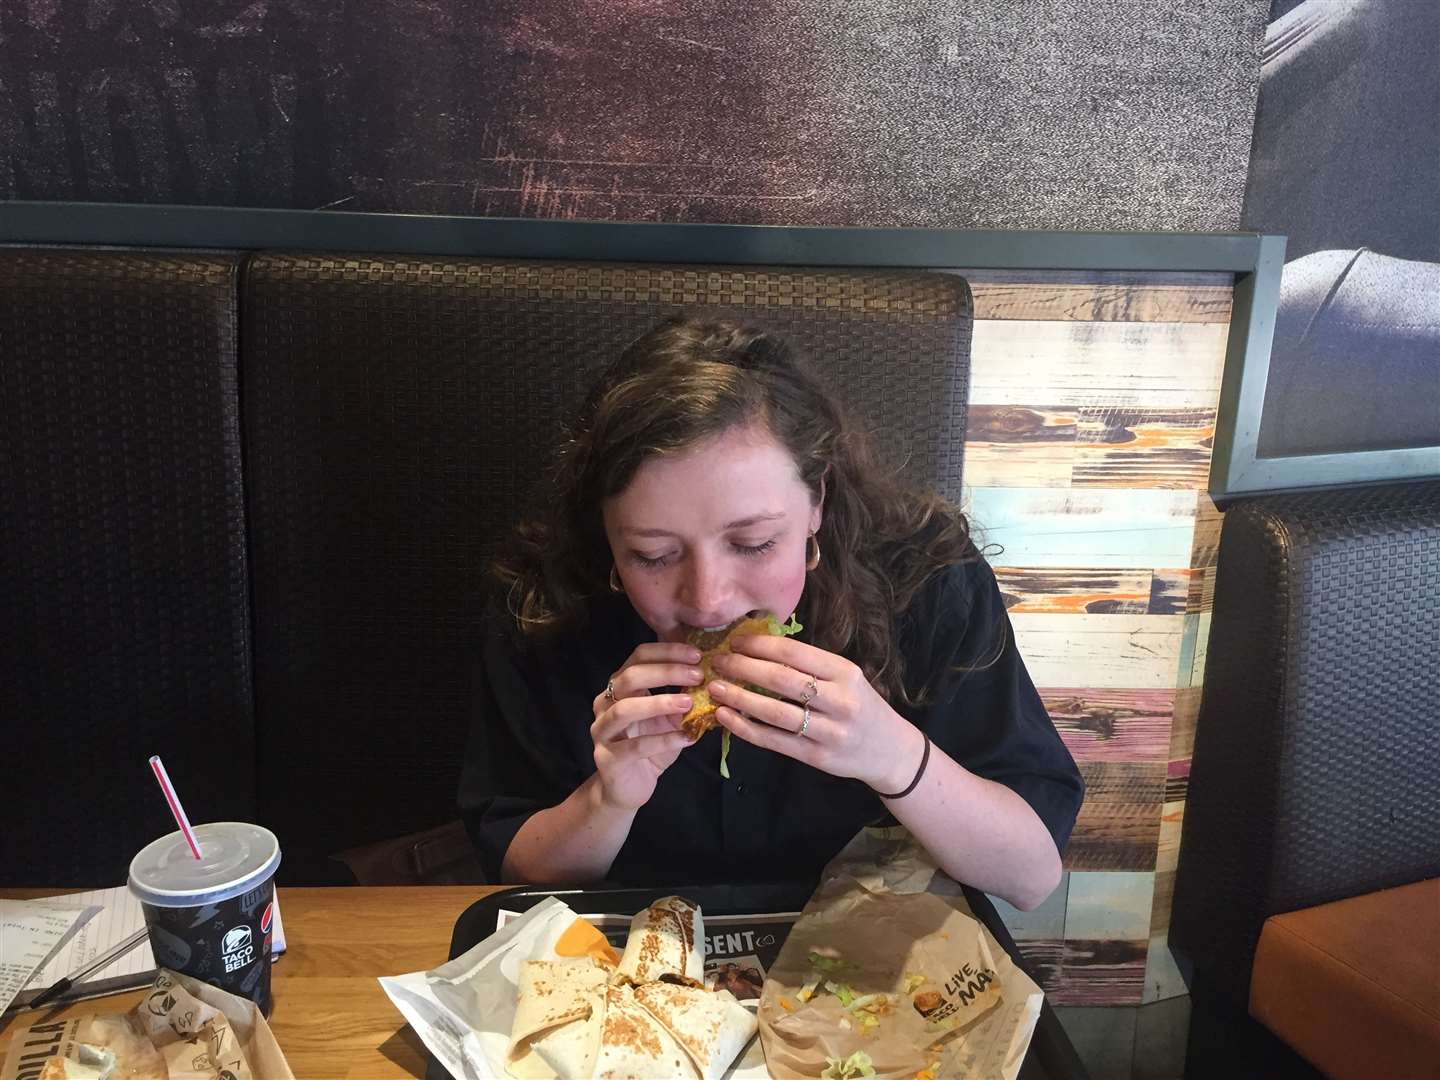 Rebecca tucking into a beef taco